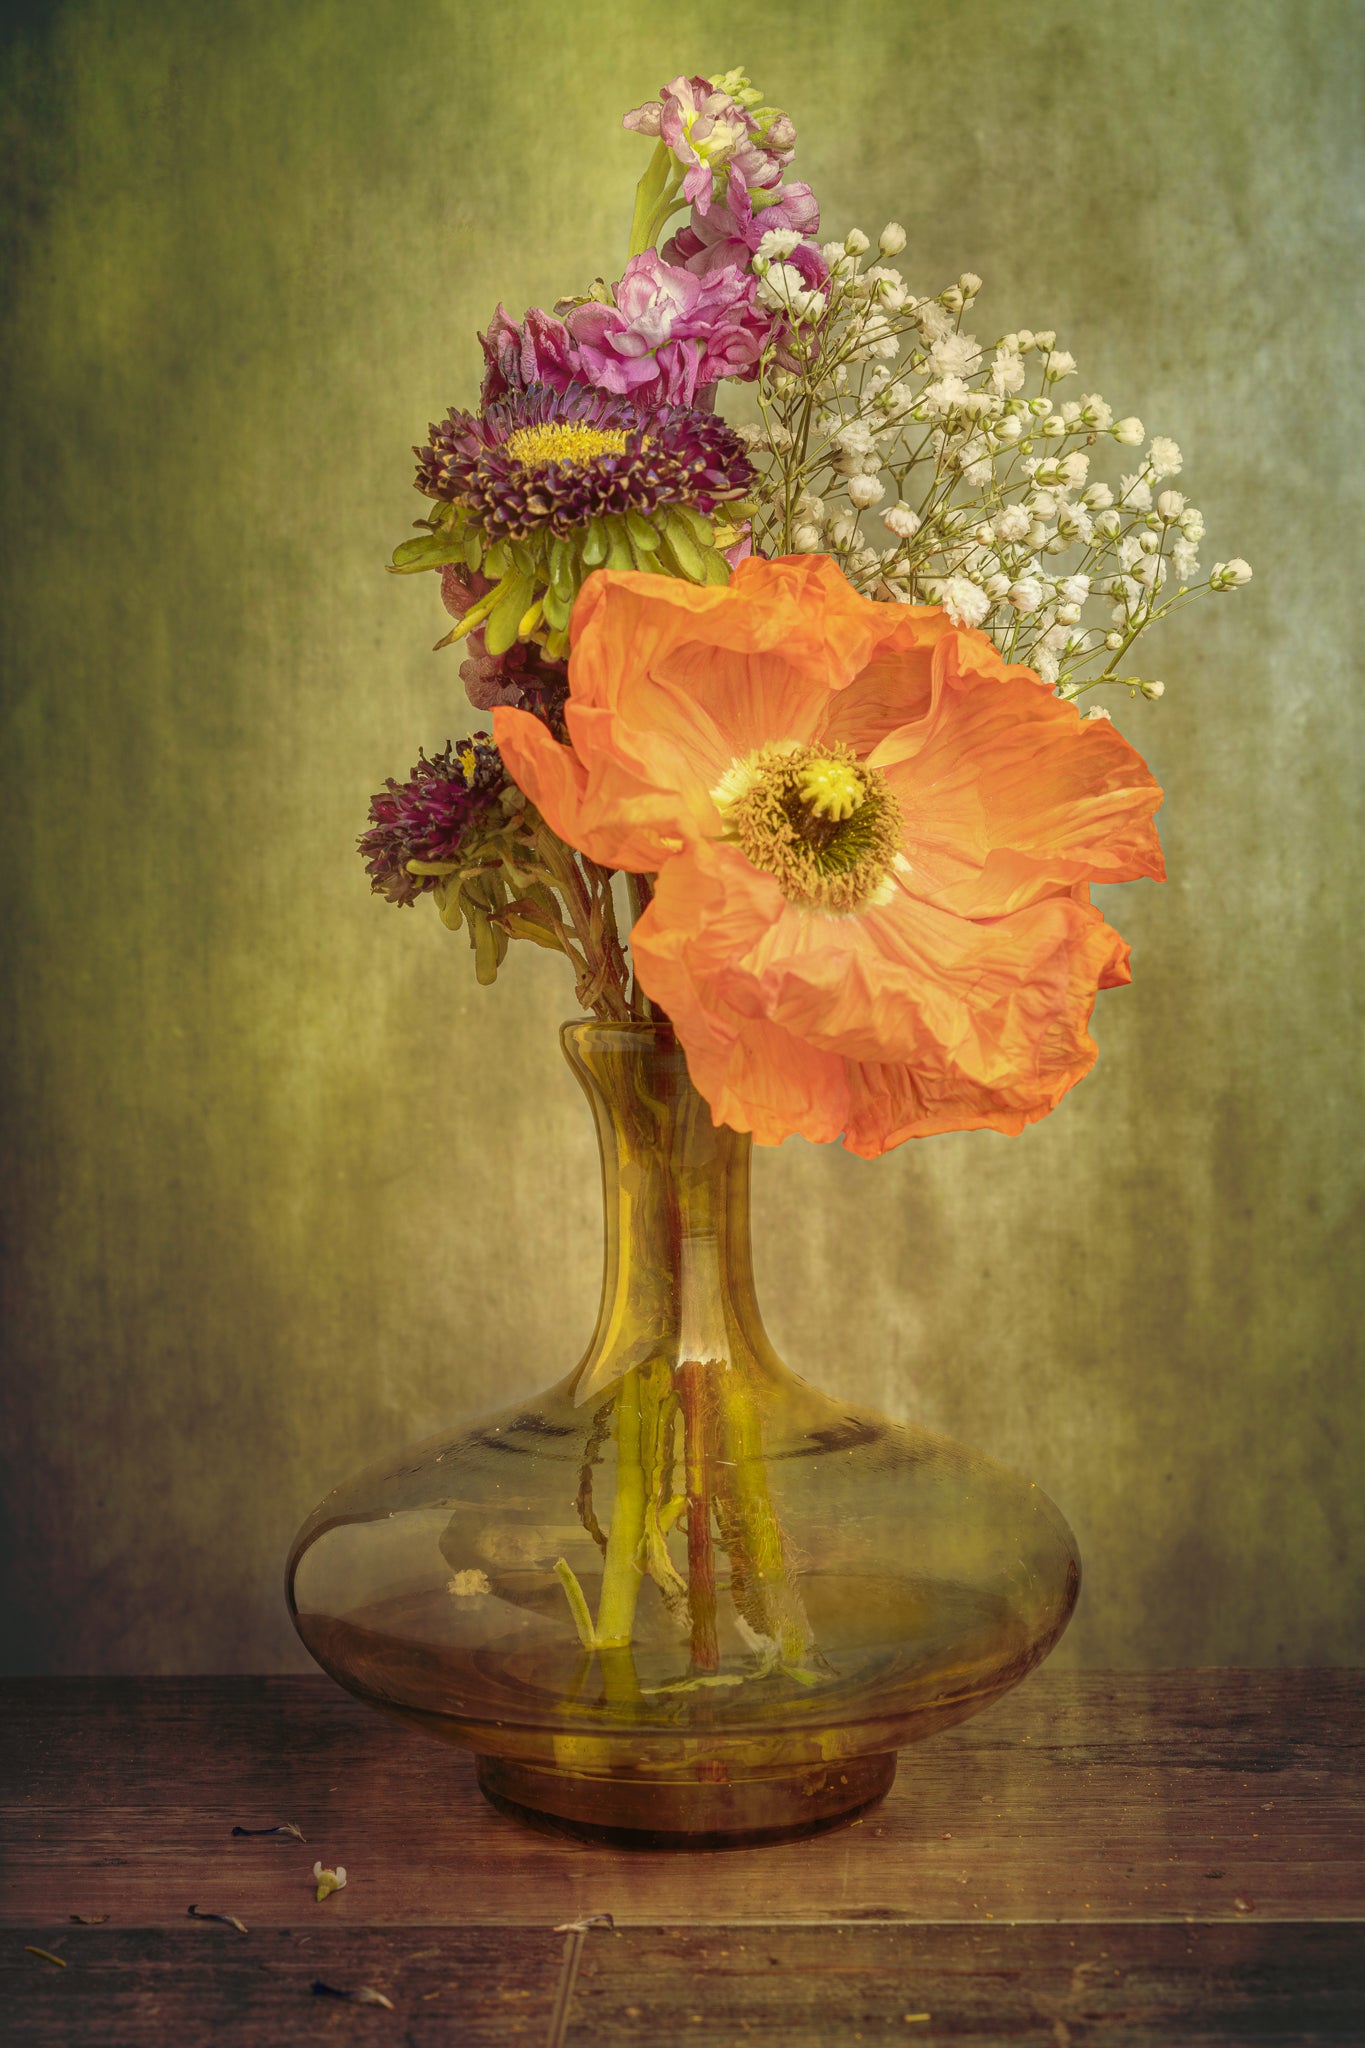 Fine art flower photograph of a bouquet with an orange Icelandic poppy titled "Speakeasy" by Cameron Dreaux of Dreaux Fine Art.